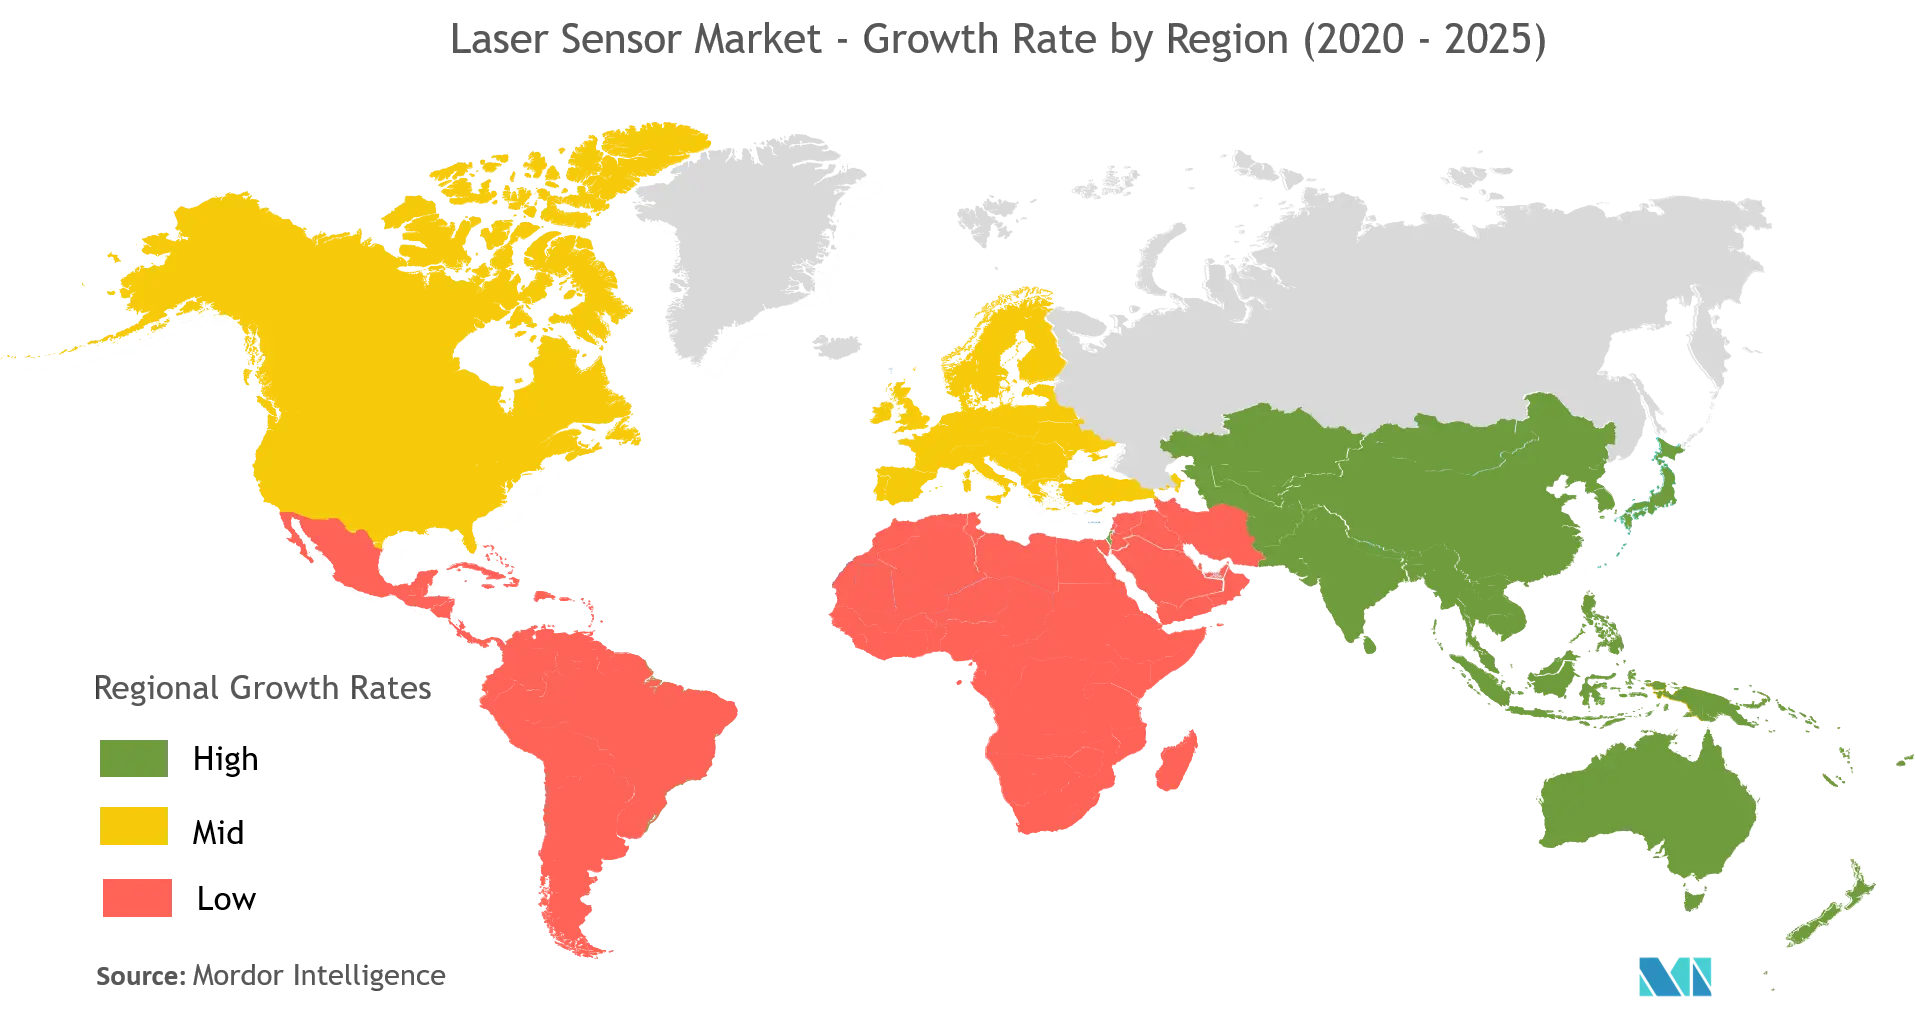 Laser Sensor Market Growth by Region